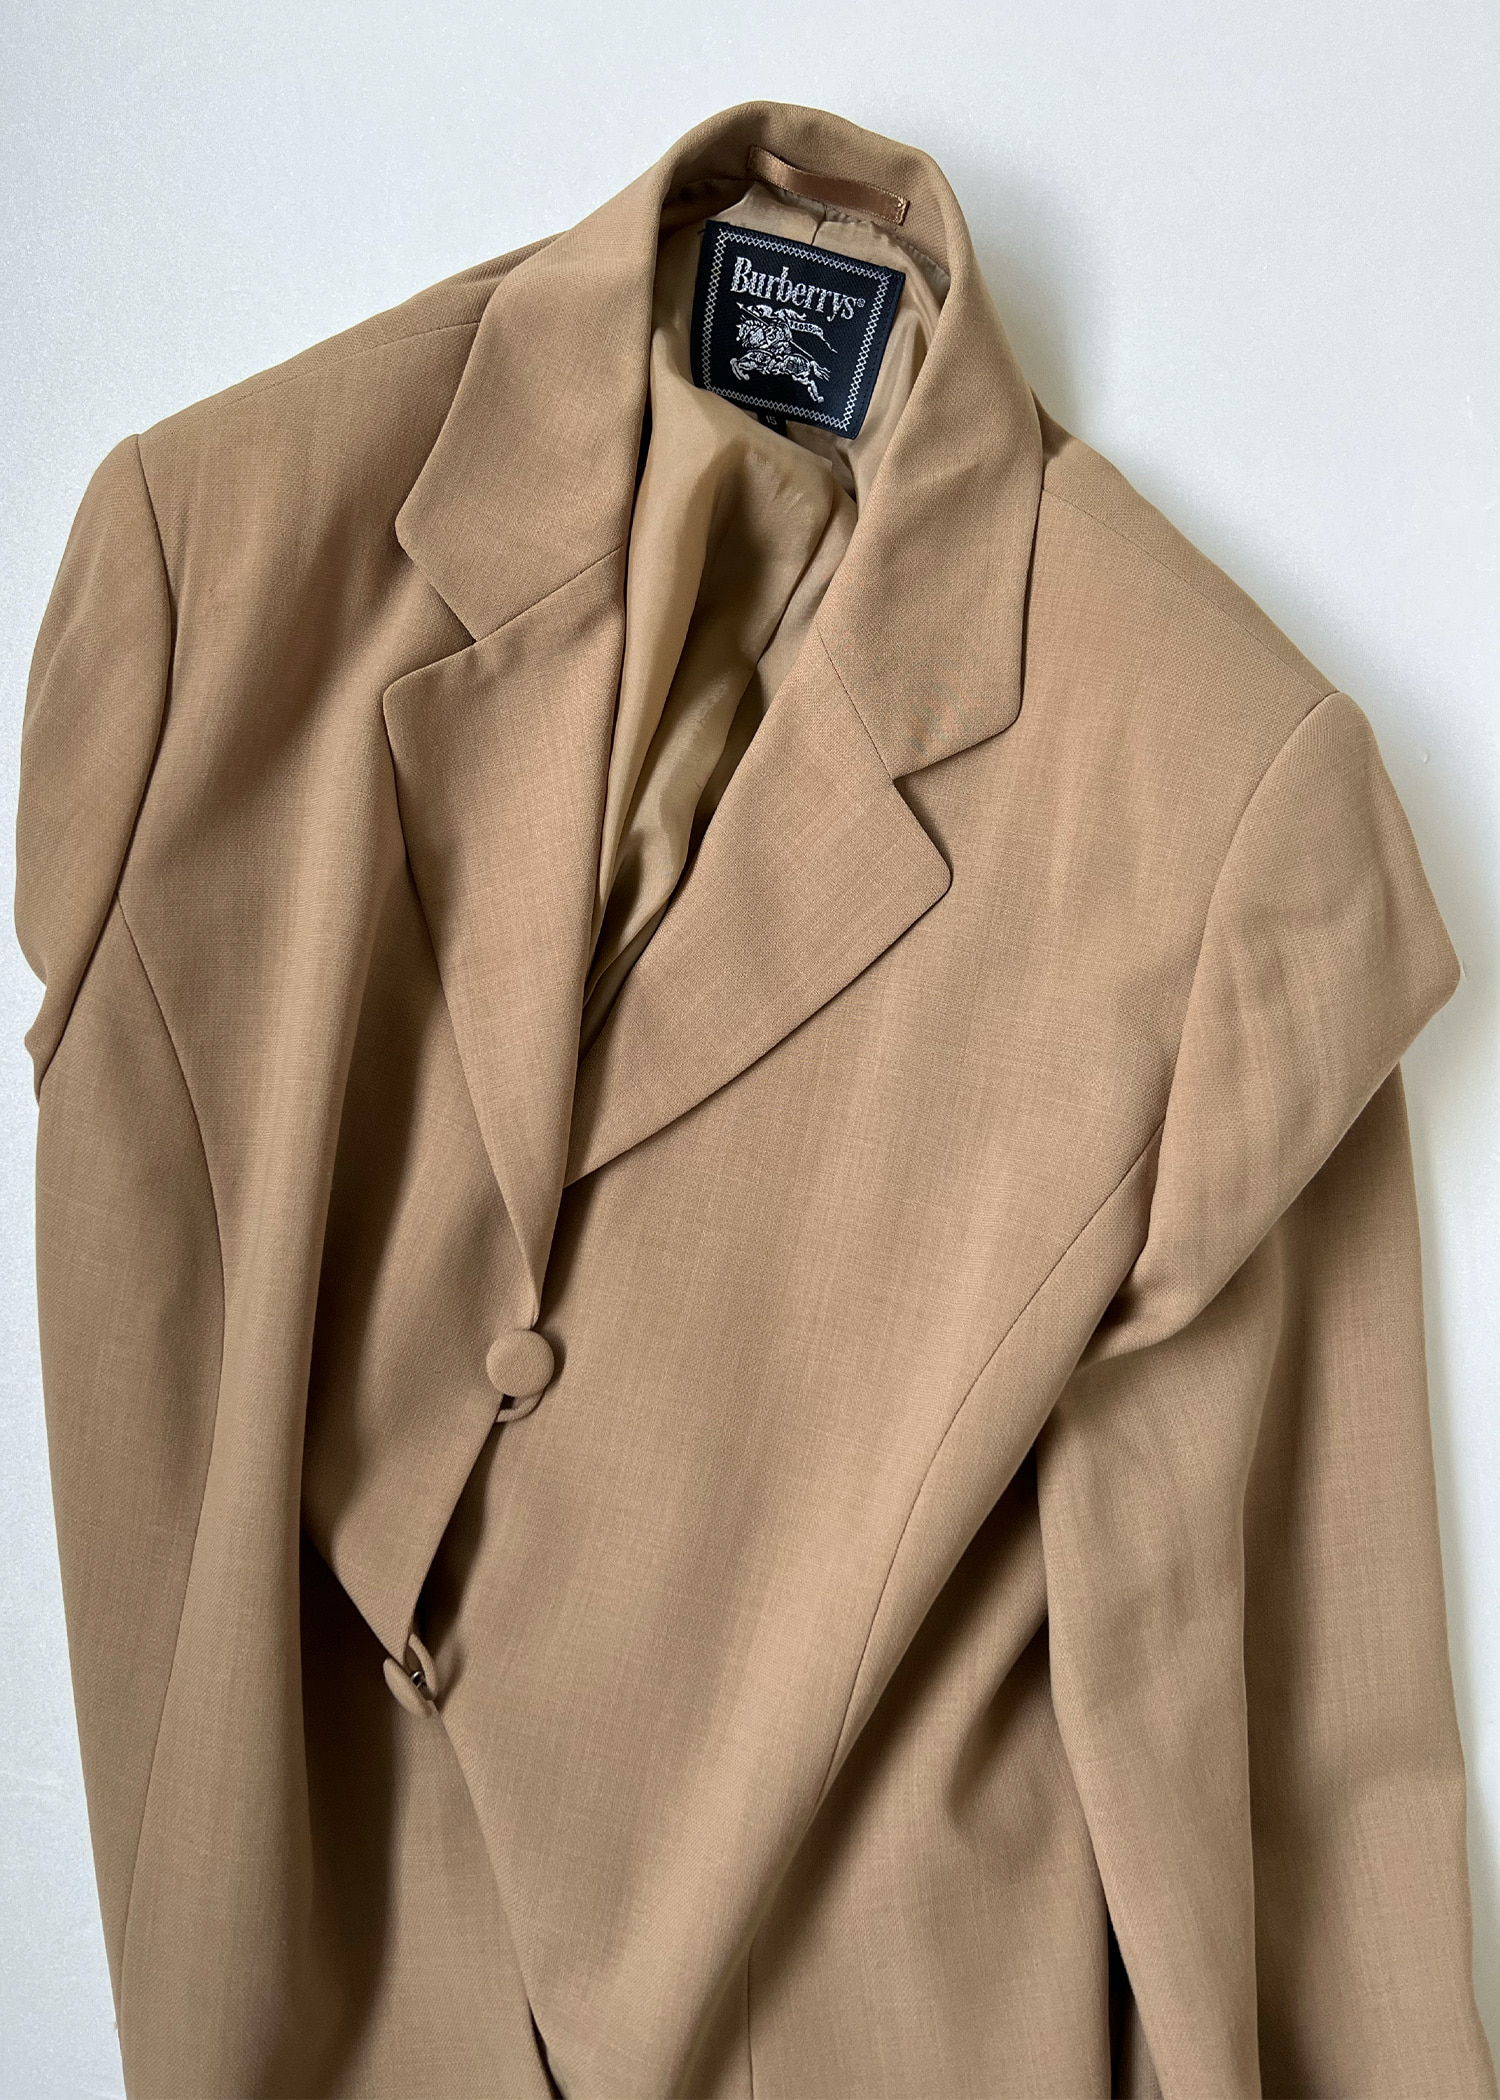 Burberry&#039;s jacket